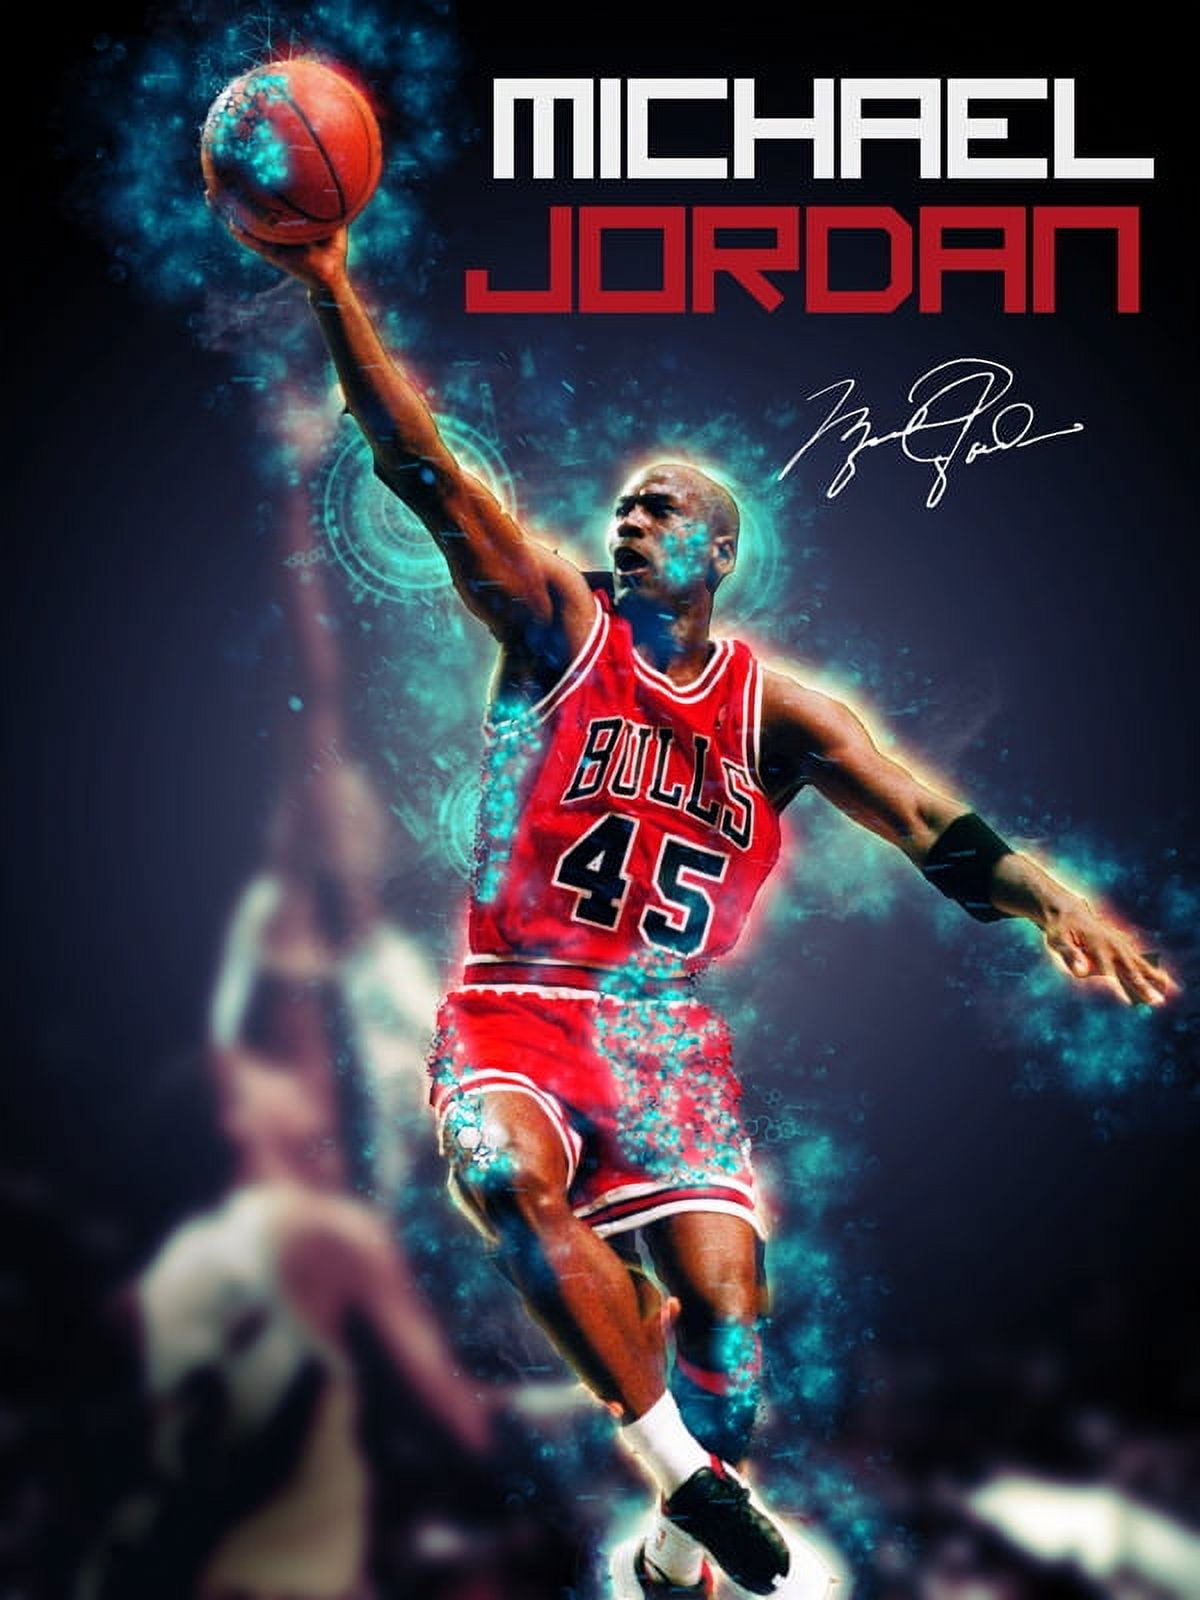 Michael Jordan Famous Foul Line Dunk Sports Poster Print 24 x 36 inches. 